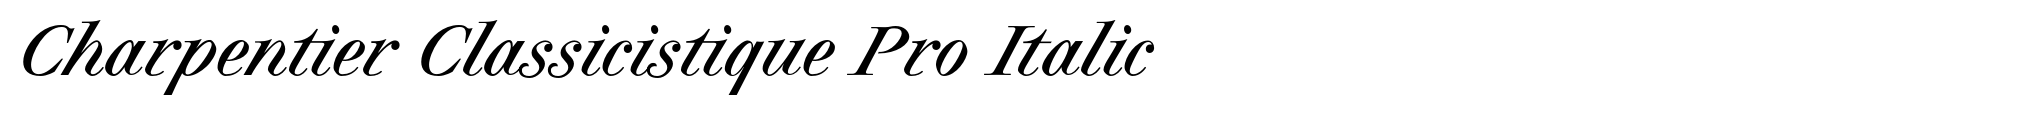 Charpentier Classicistique Pro Italic image